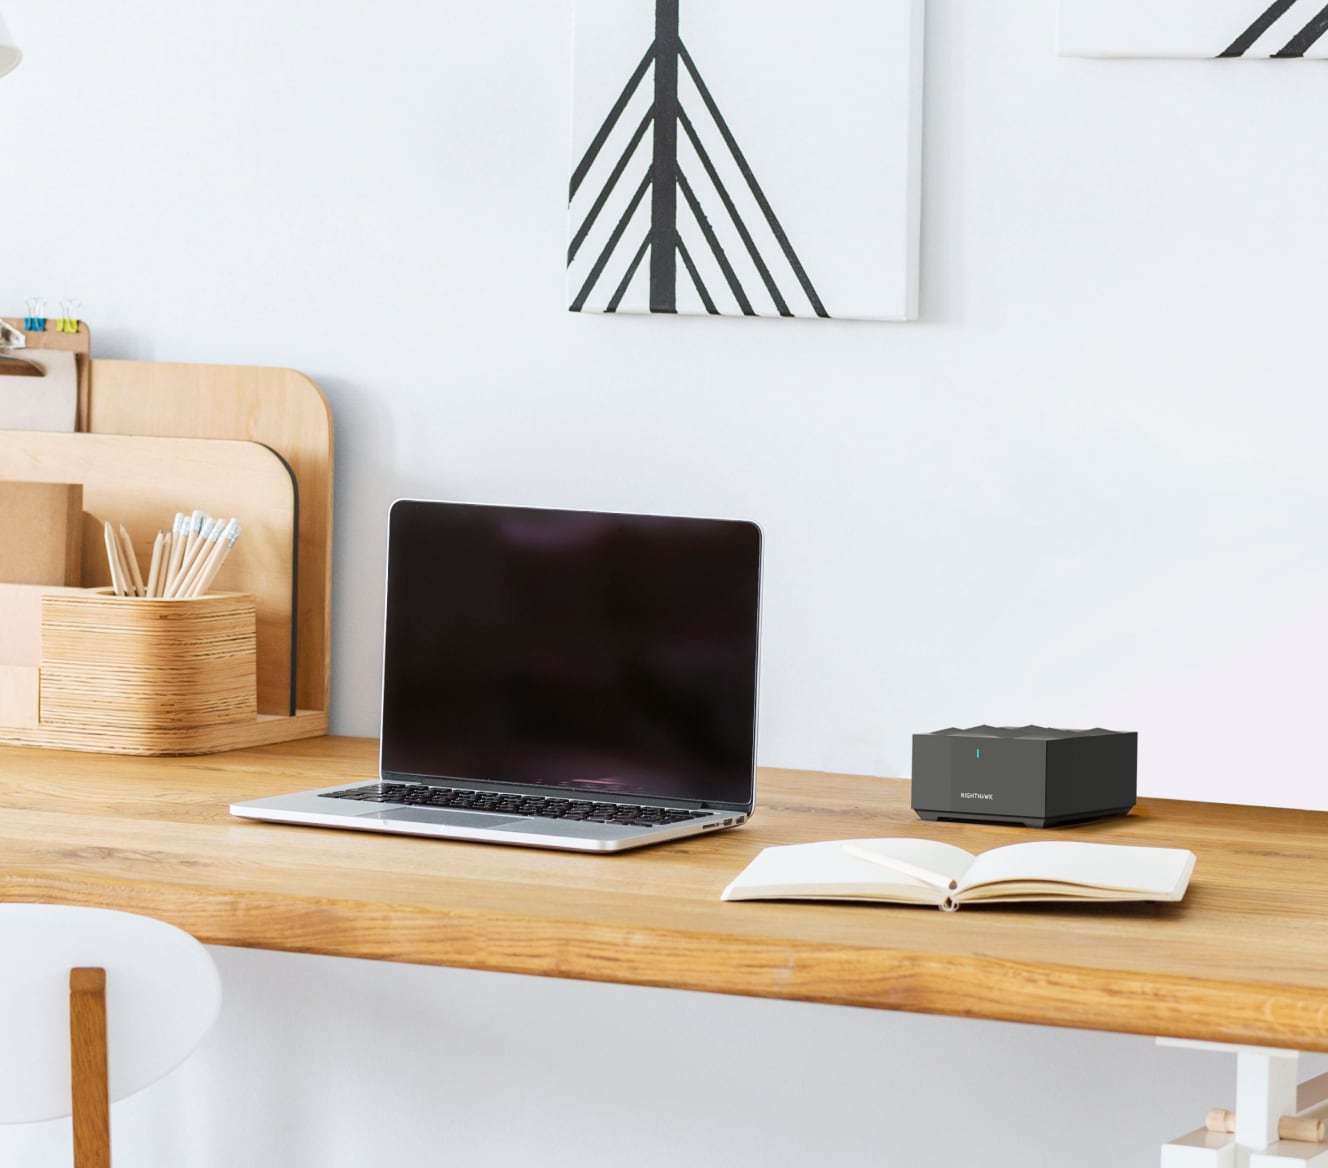 Netgear Mesh WiFi on a wooden desk next to a laptop and notebook